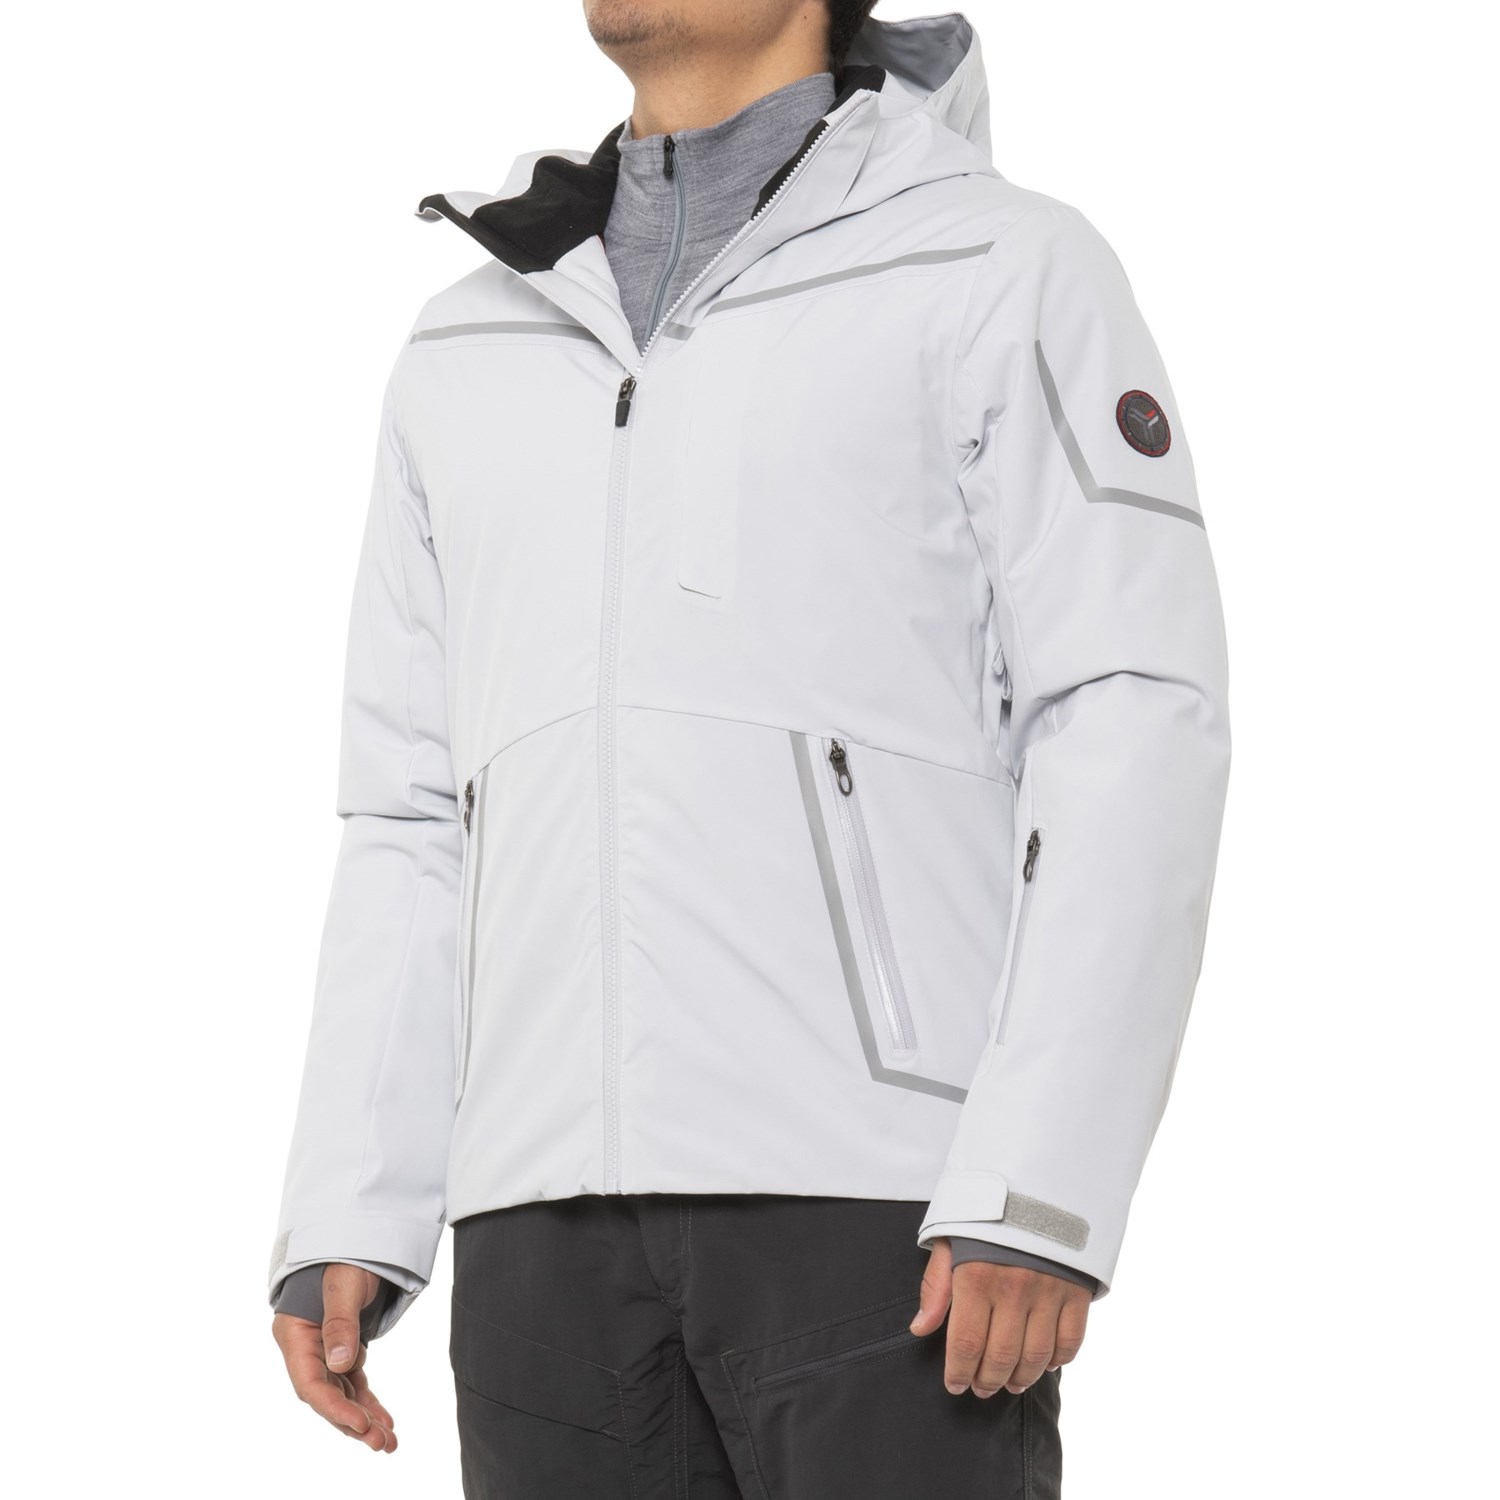 Fera Shadow Ski Jacket (For Men) - Save 65%